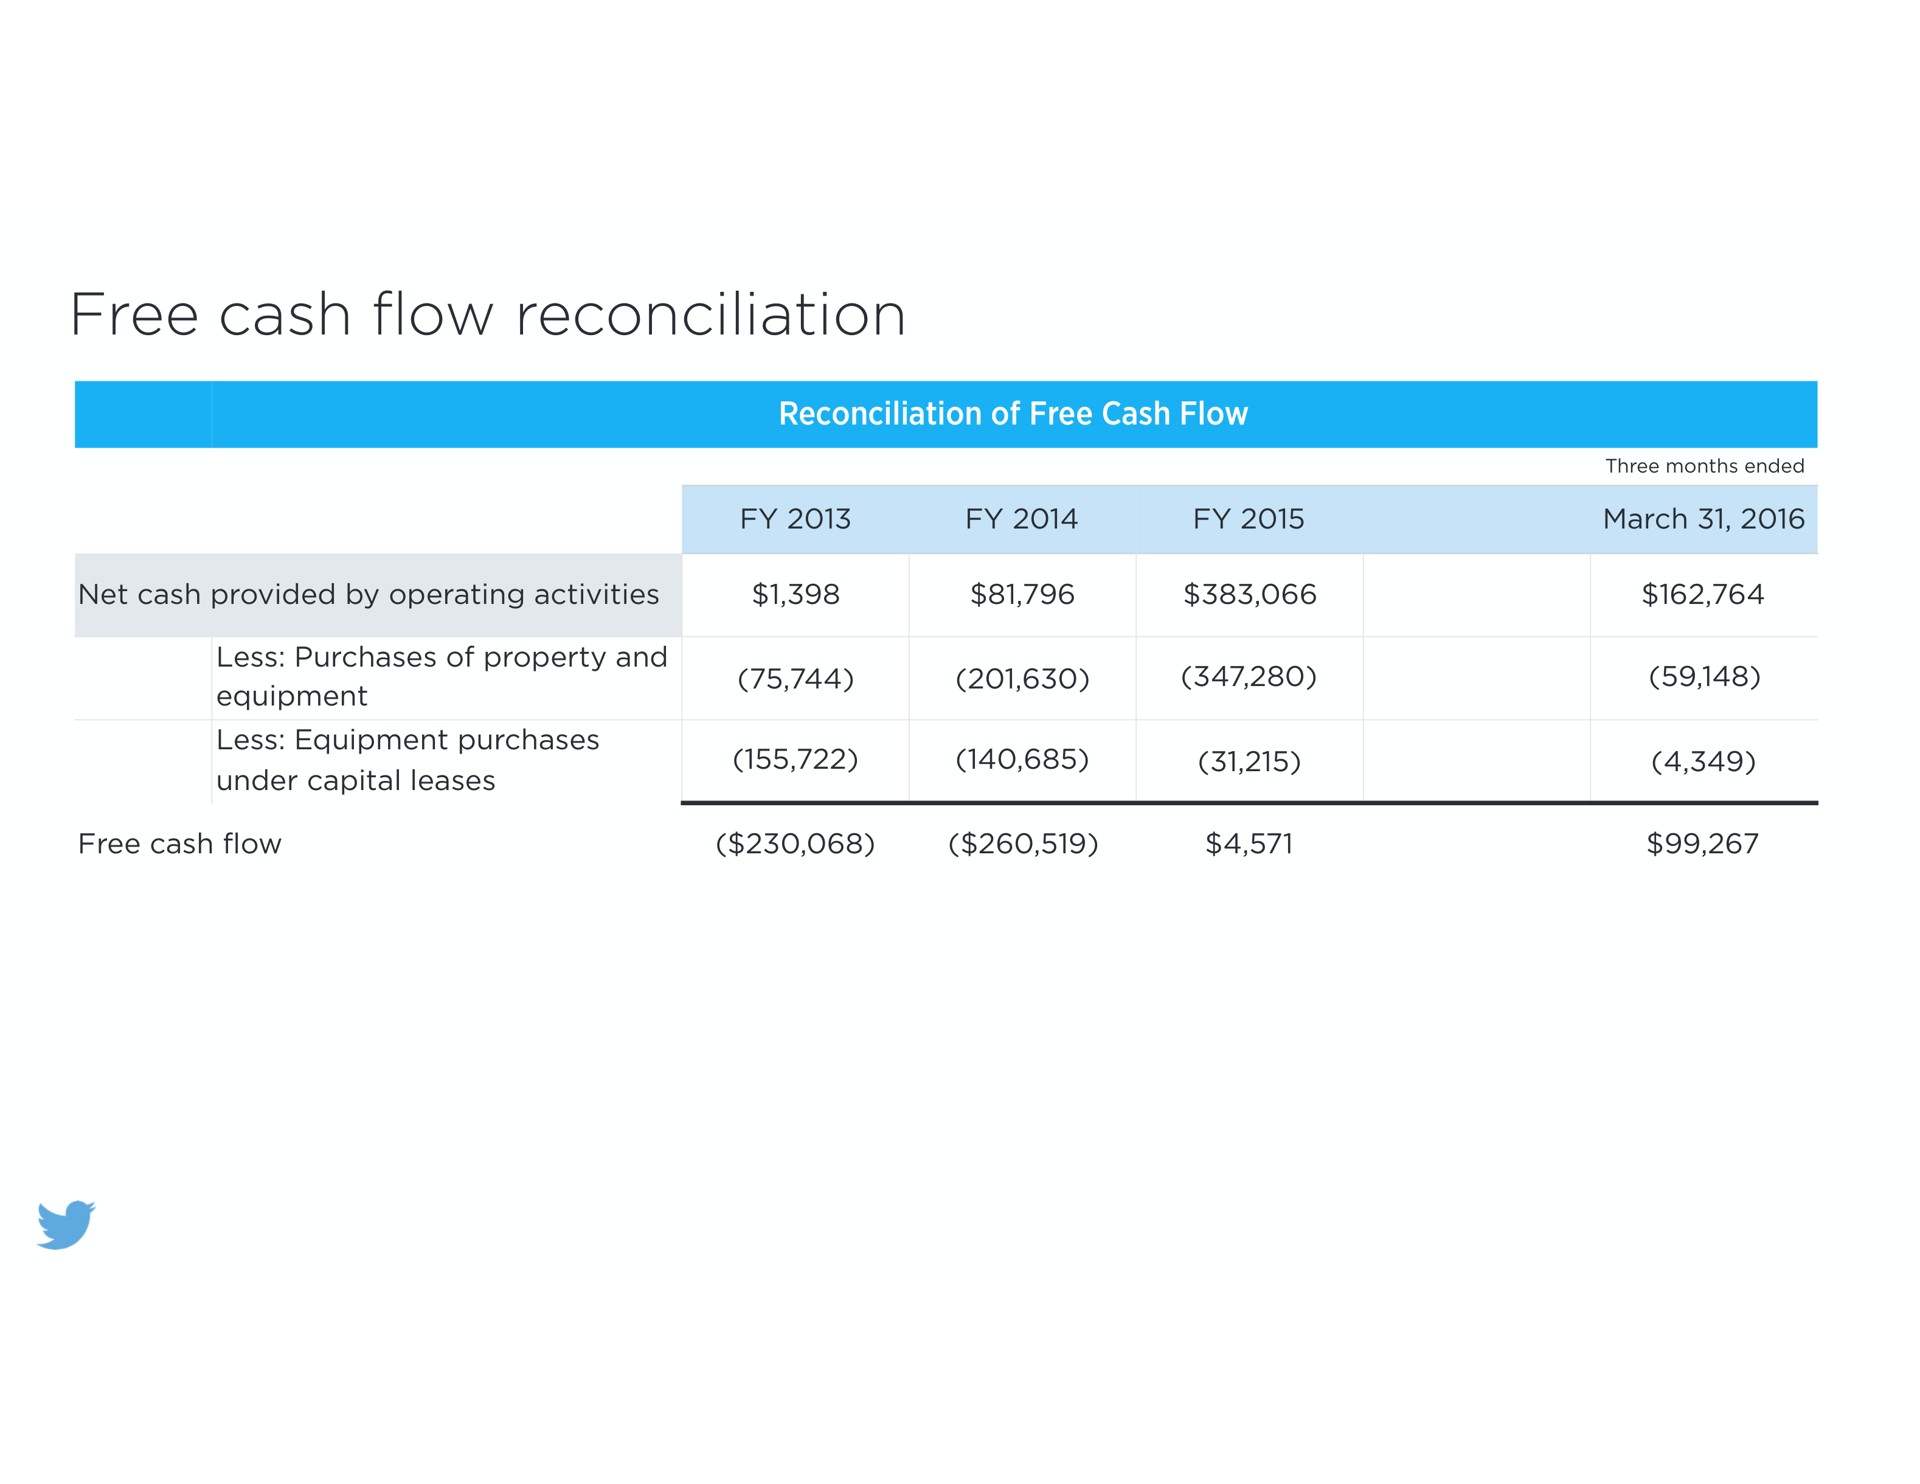 free cash reconciliation flow quip | Twitter